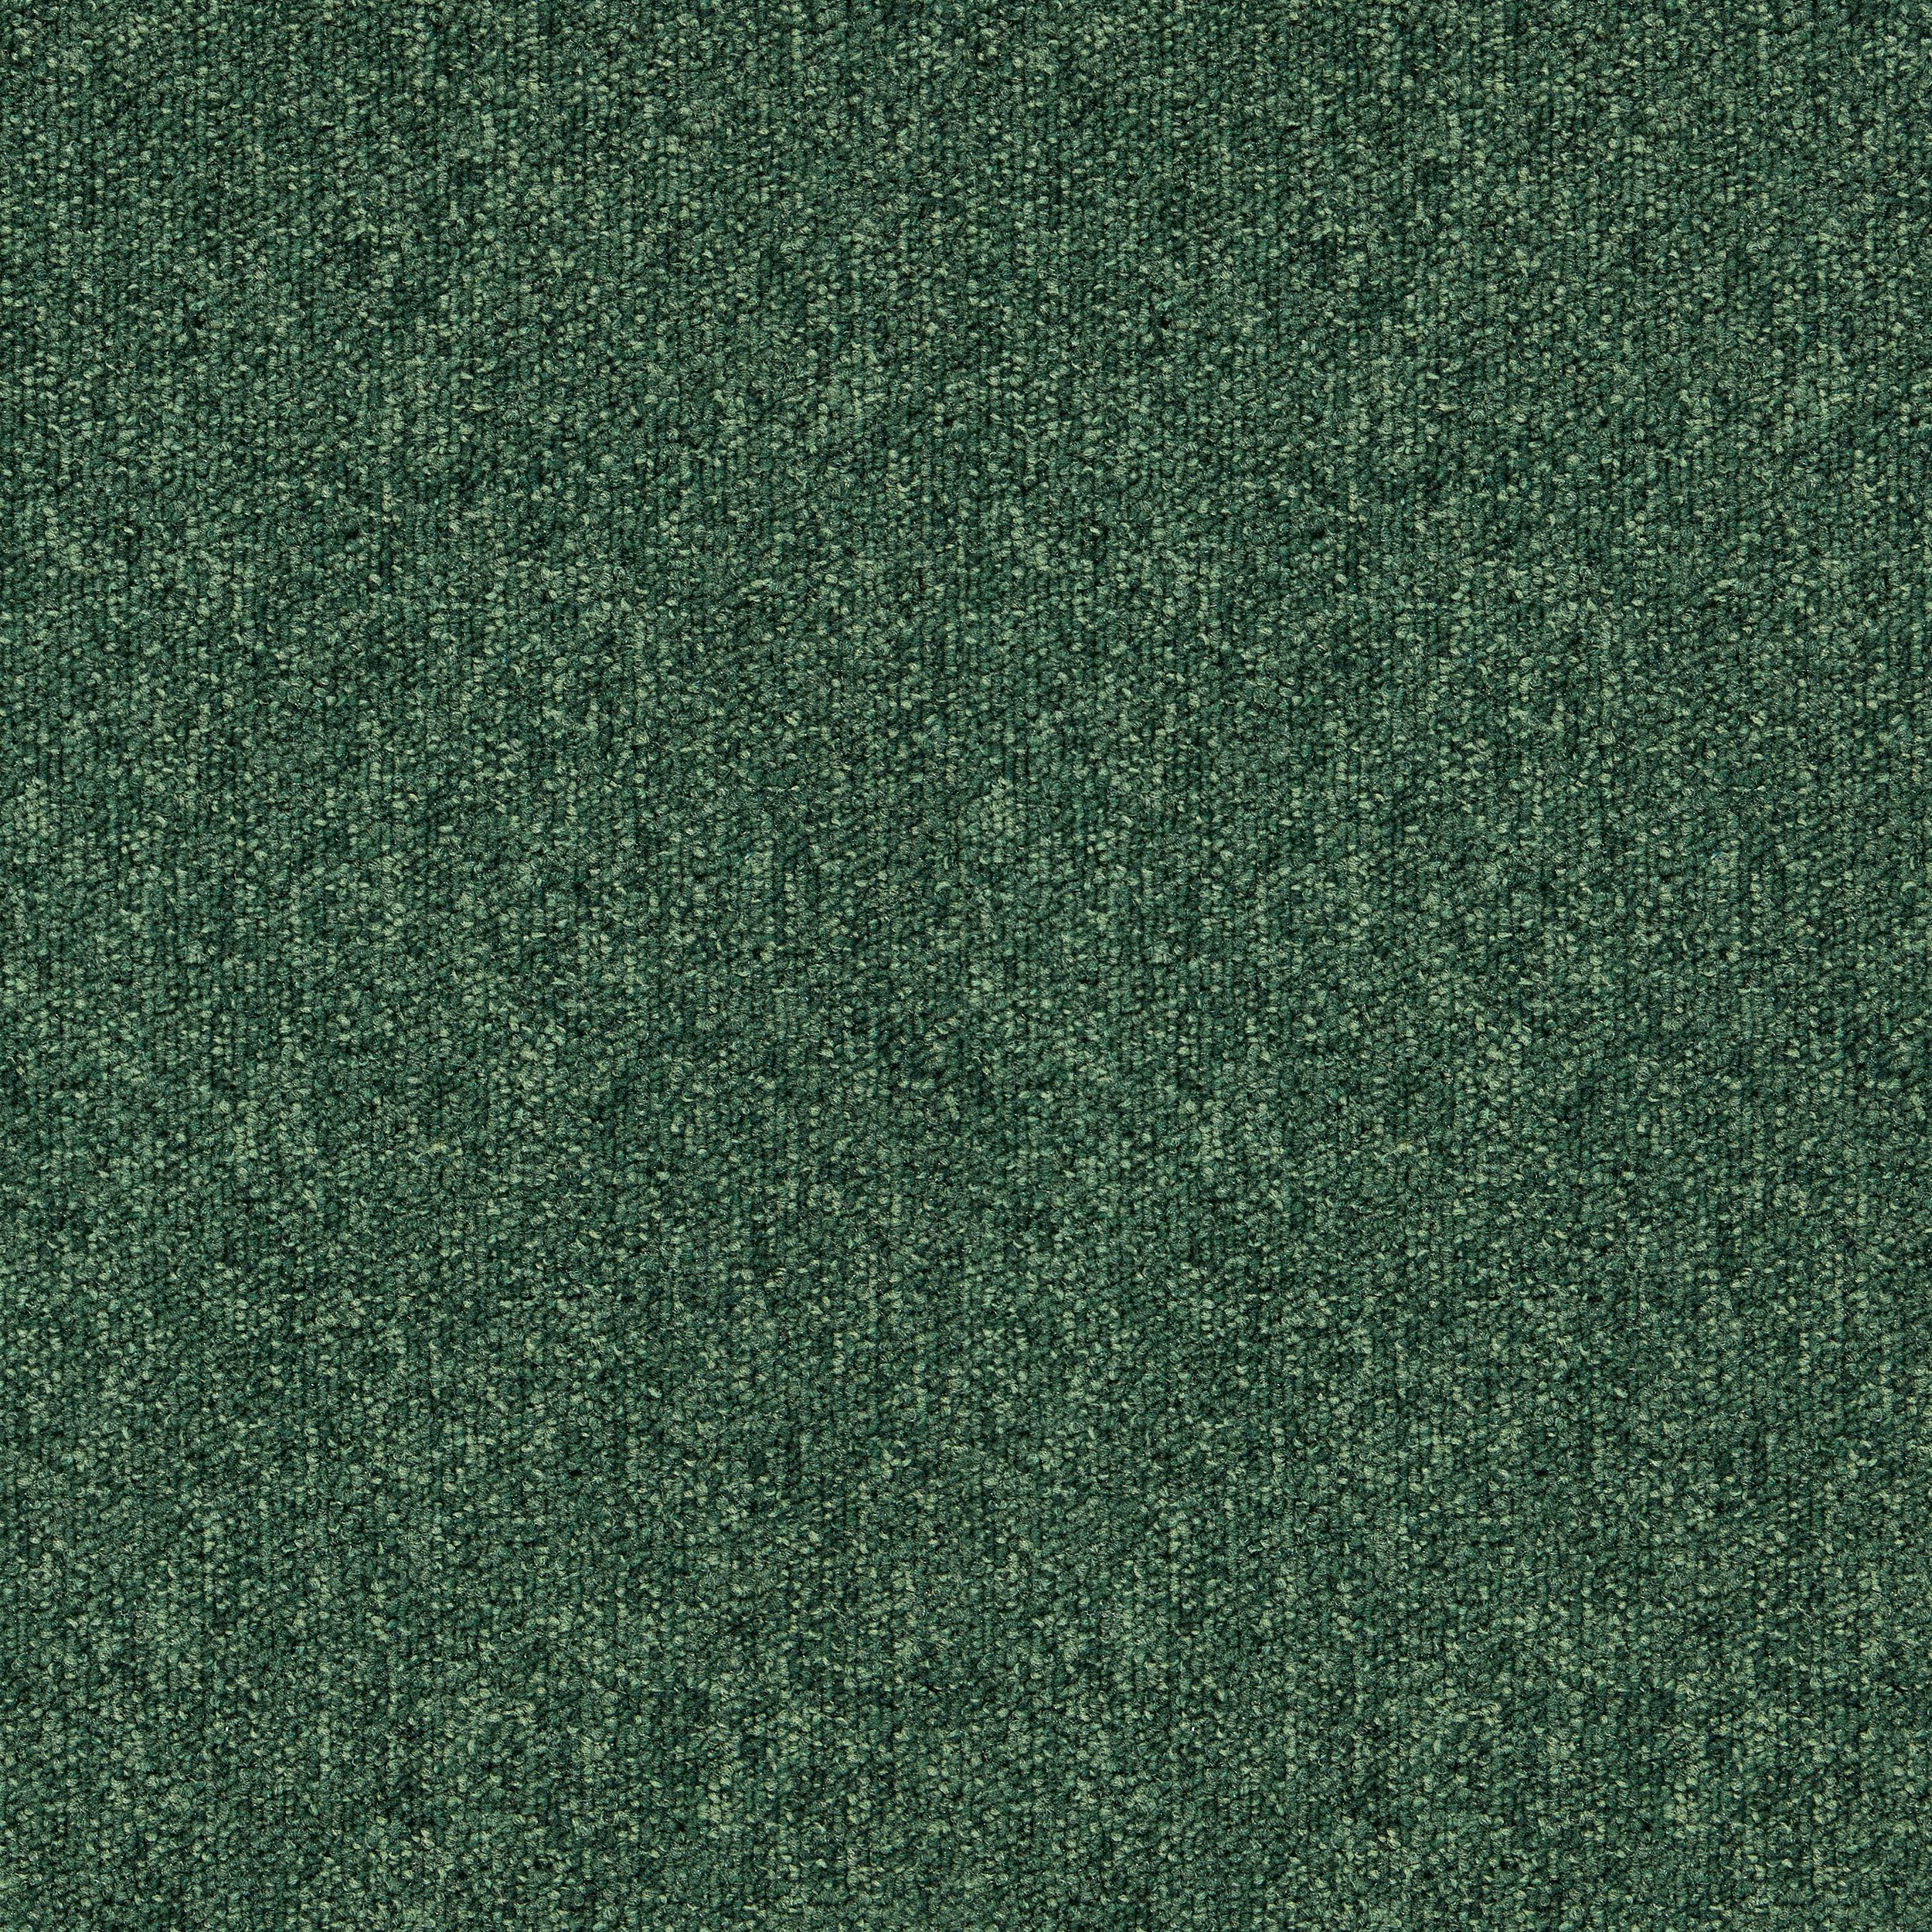 Heuga 727 Carpet Tile In Bottle Green número de imagen 7